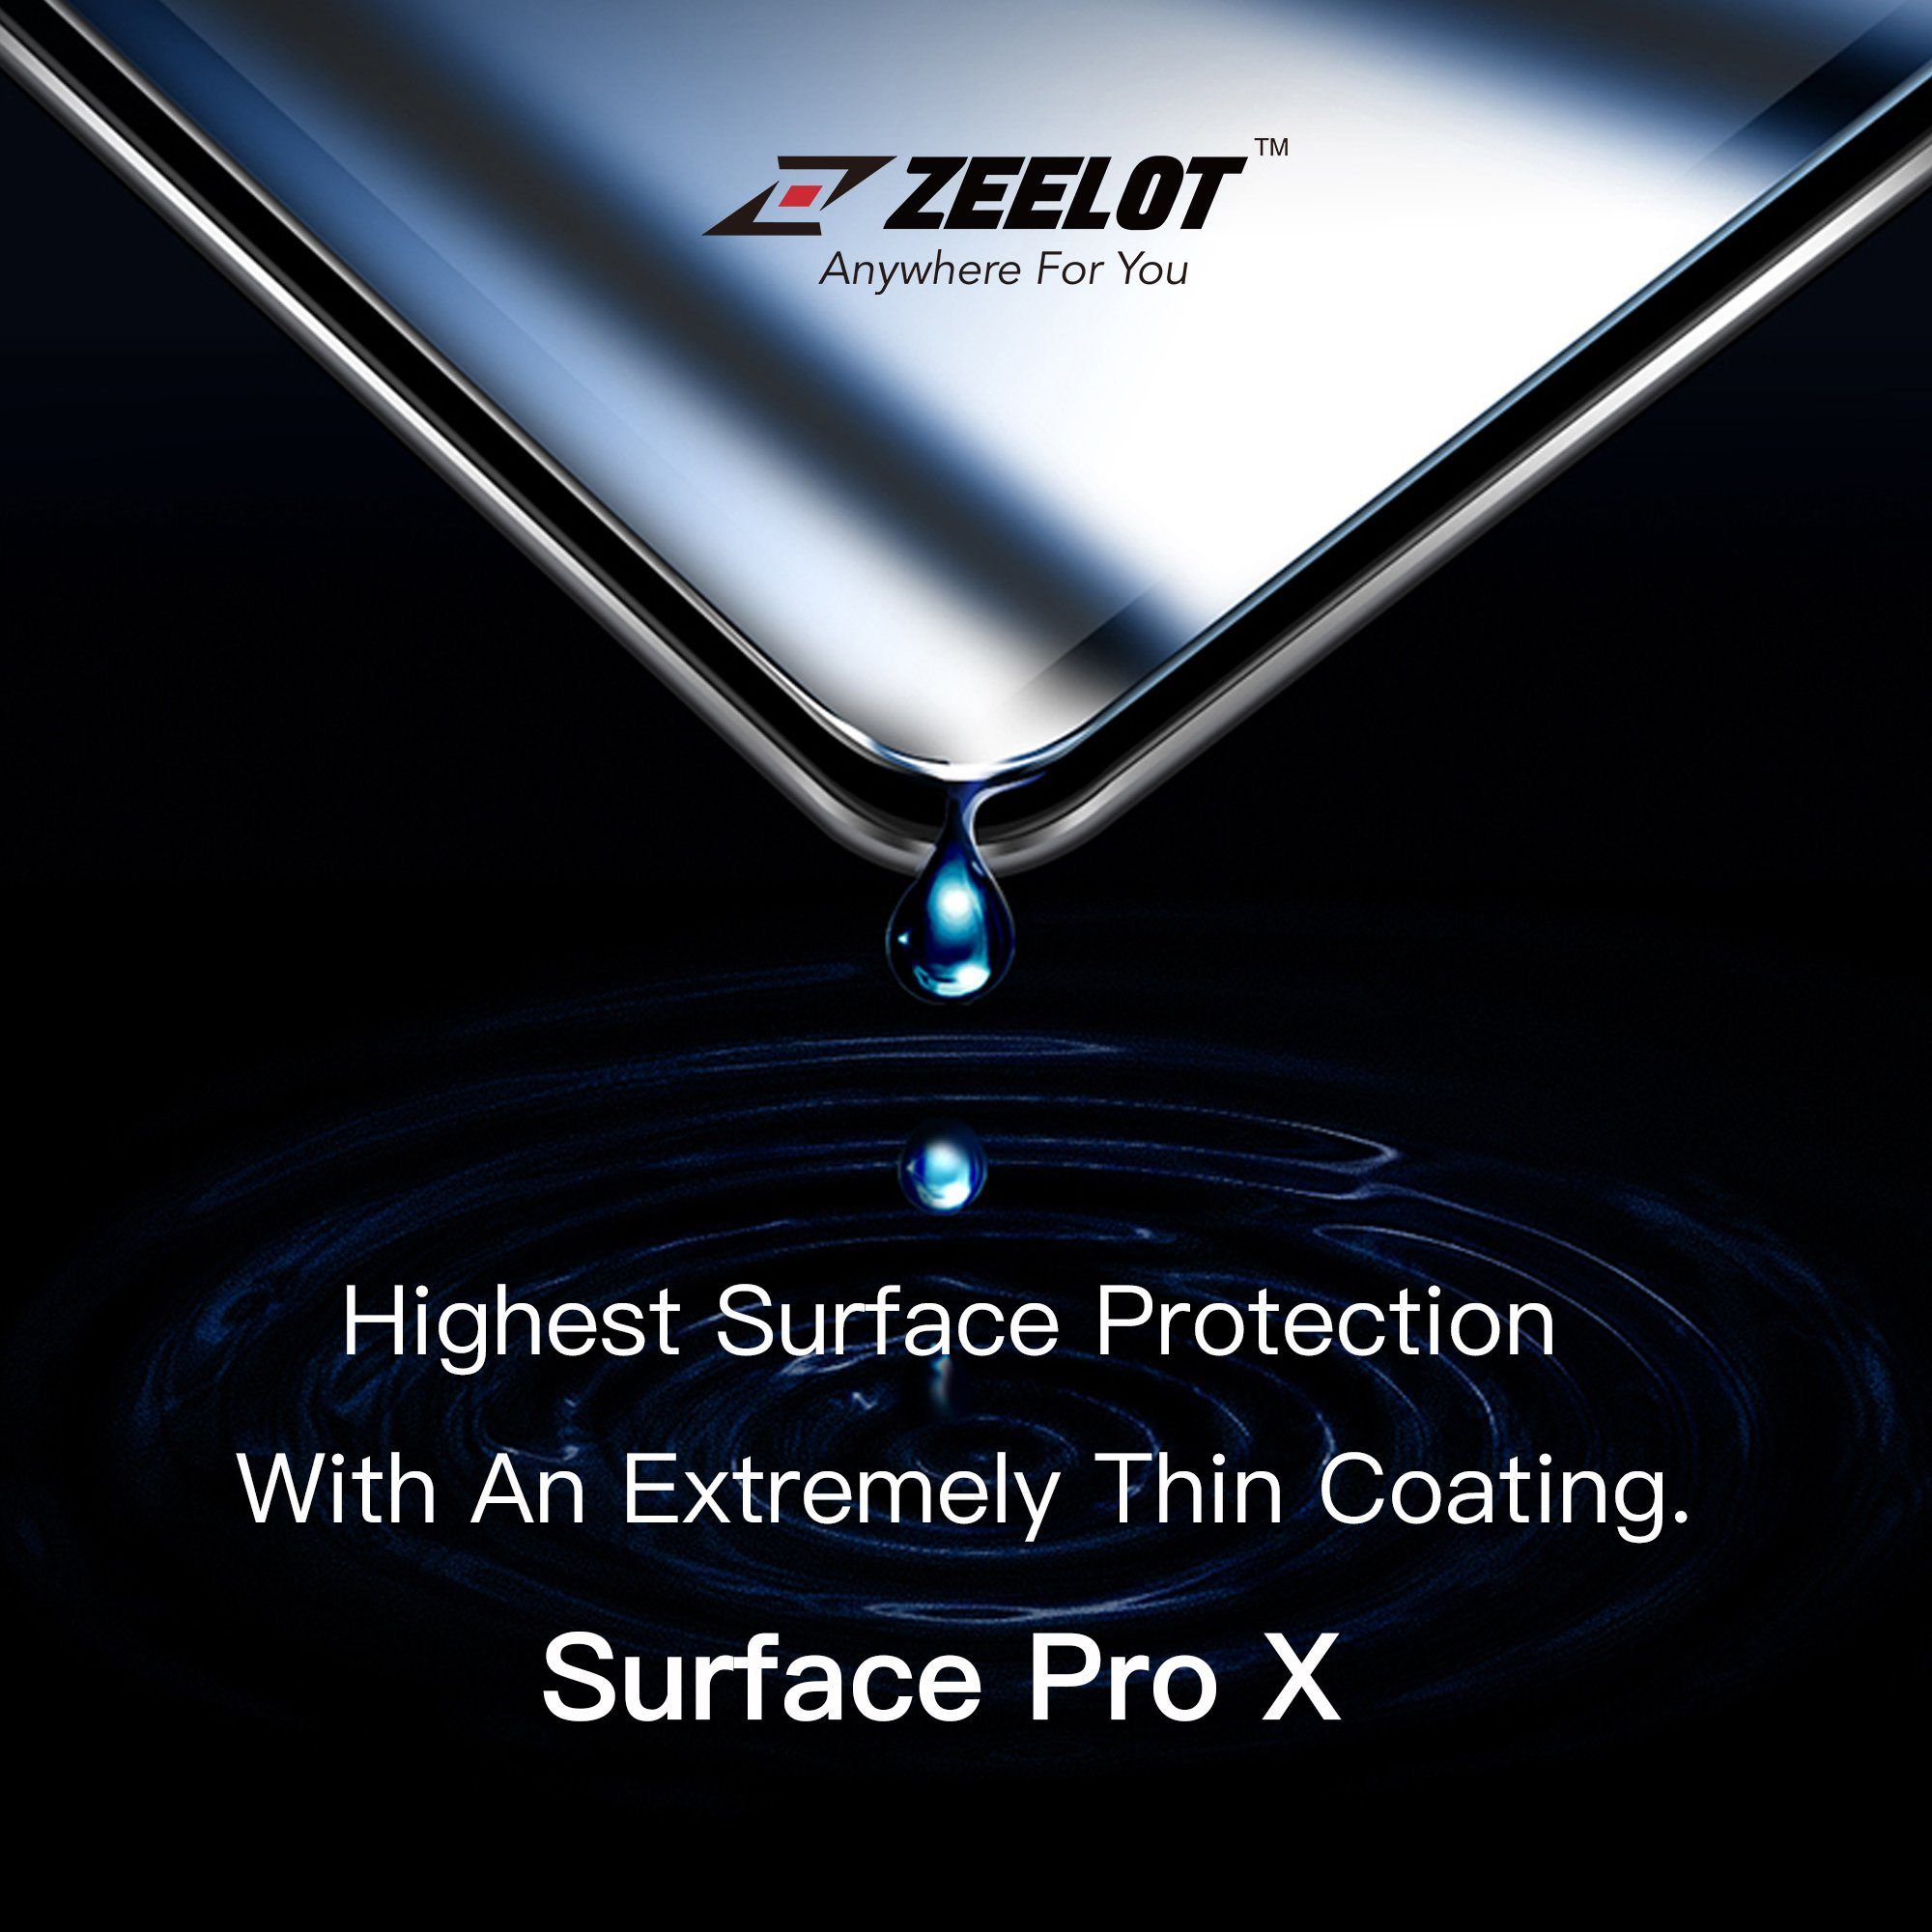 ZEELOT PureGlass 2.5D Tempered Glass Screen Protector for Microsoft Surface Pro X (2020), Clear Surface Pro X ZEELOT 